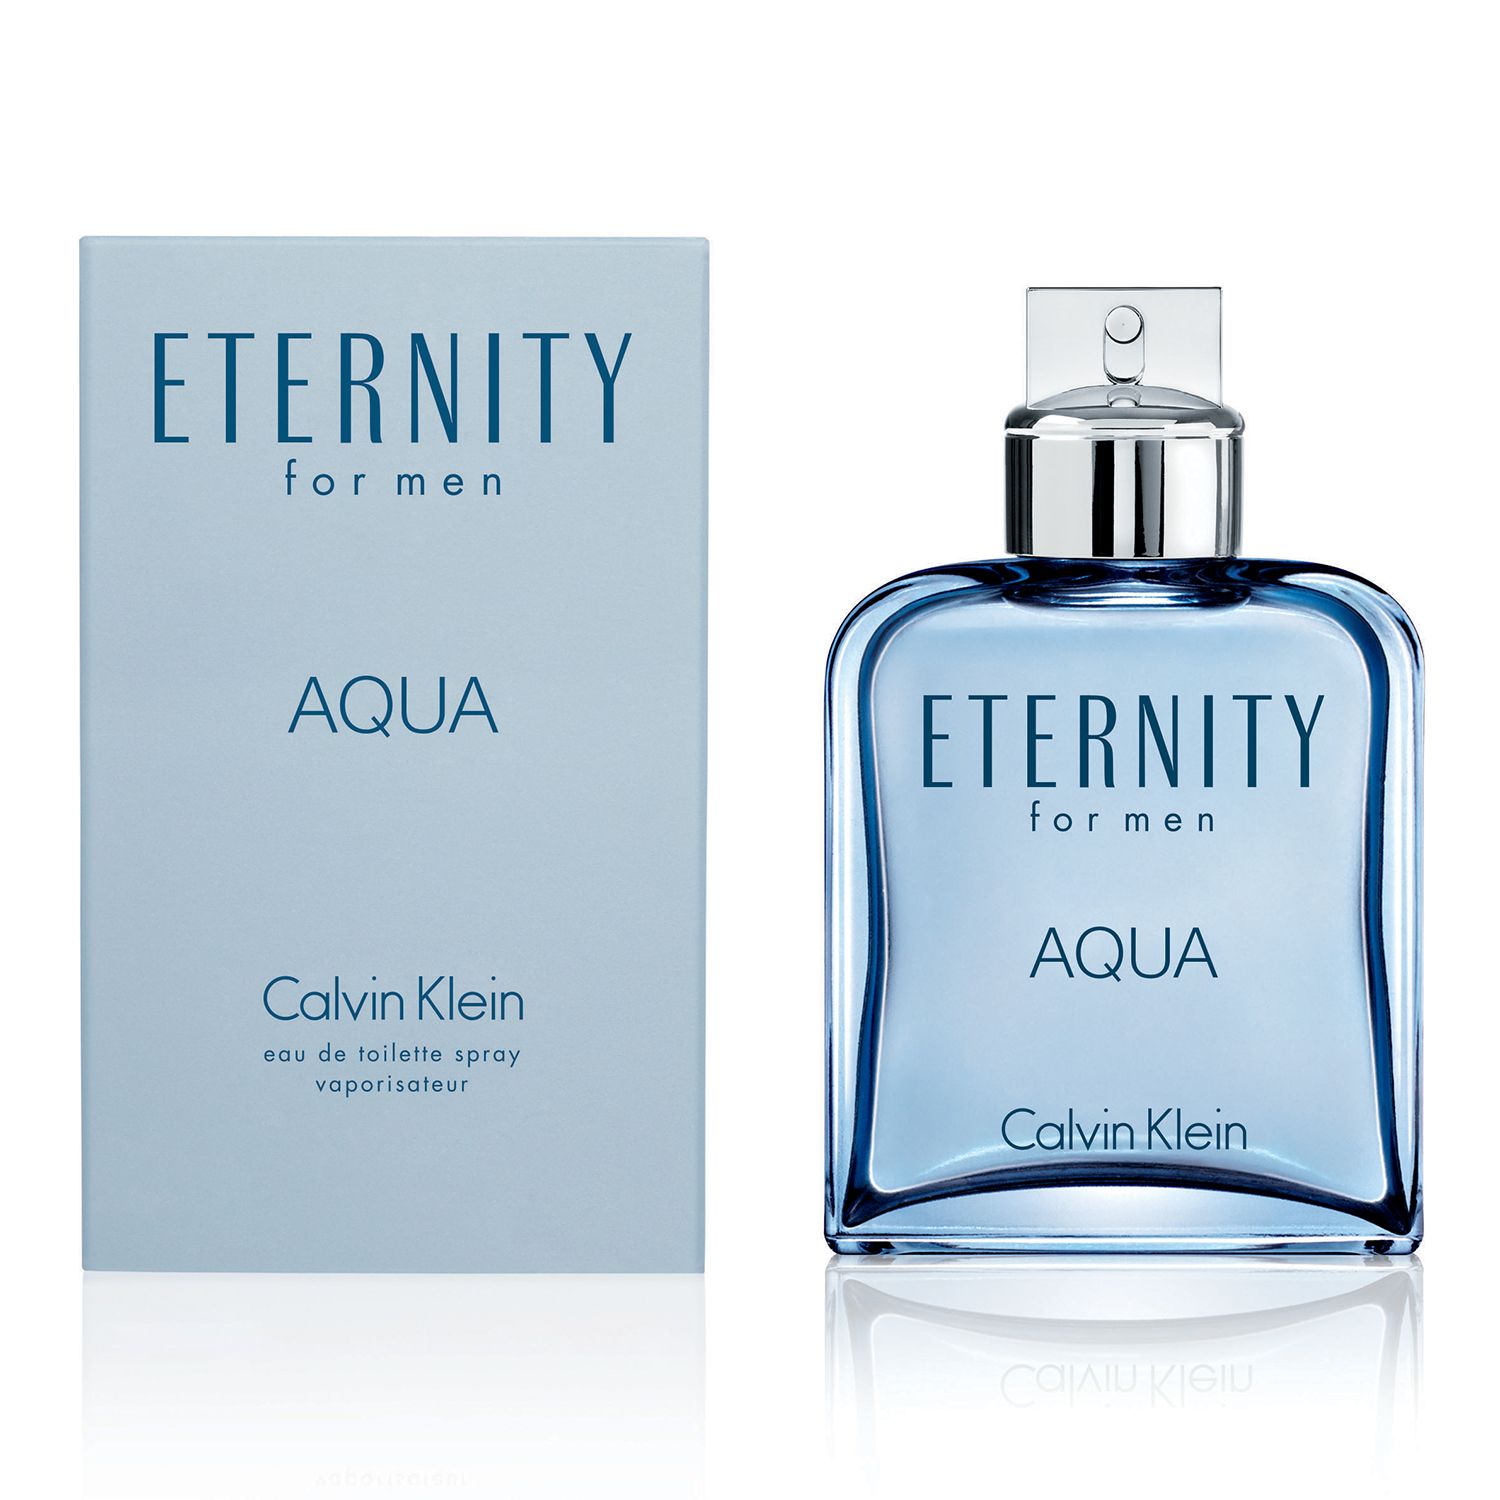 ck eternity aqua perfume